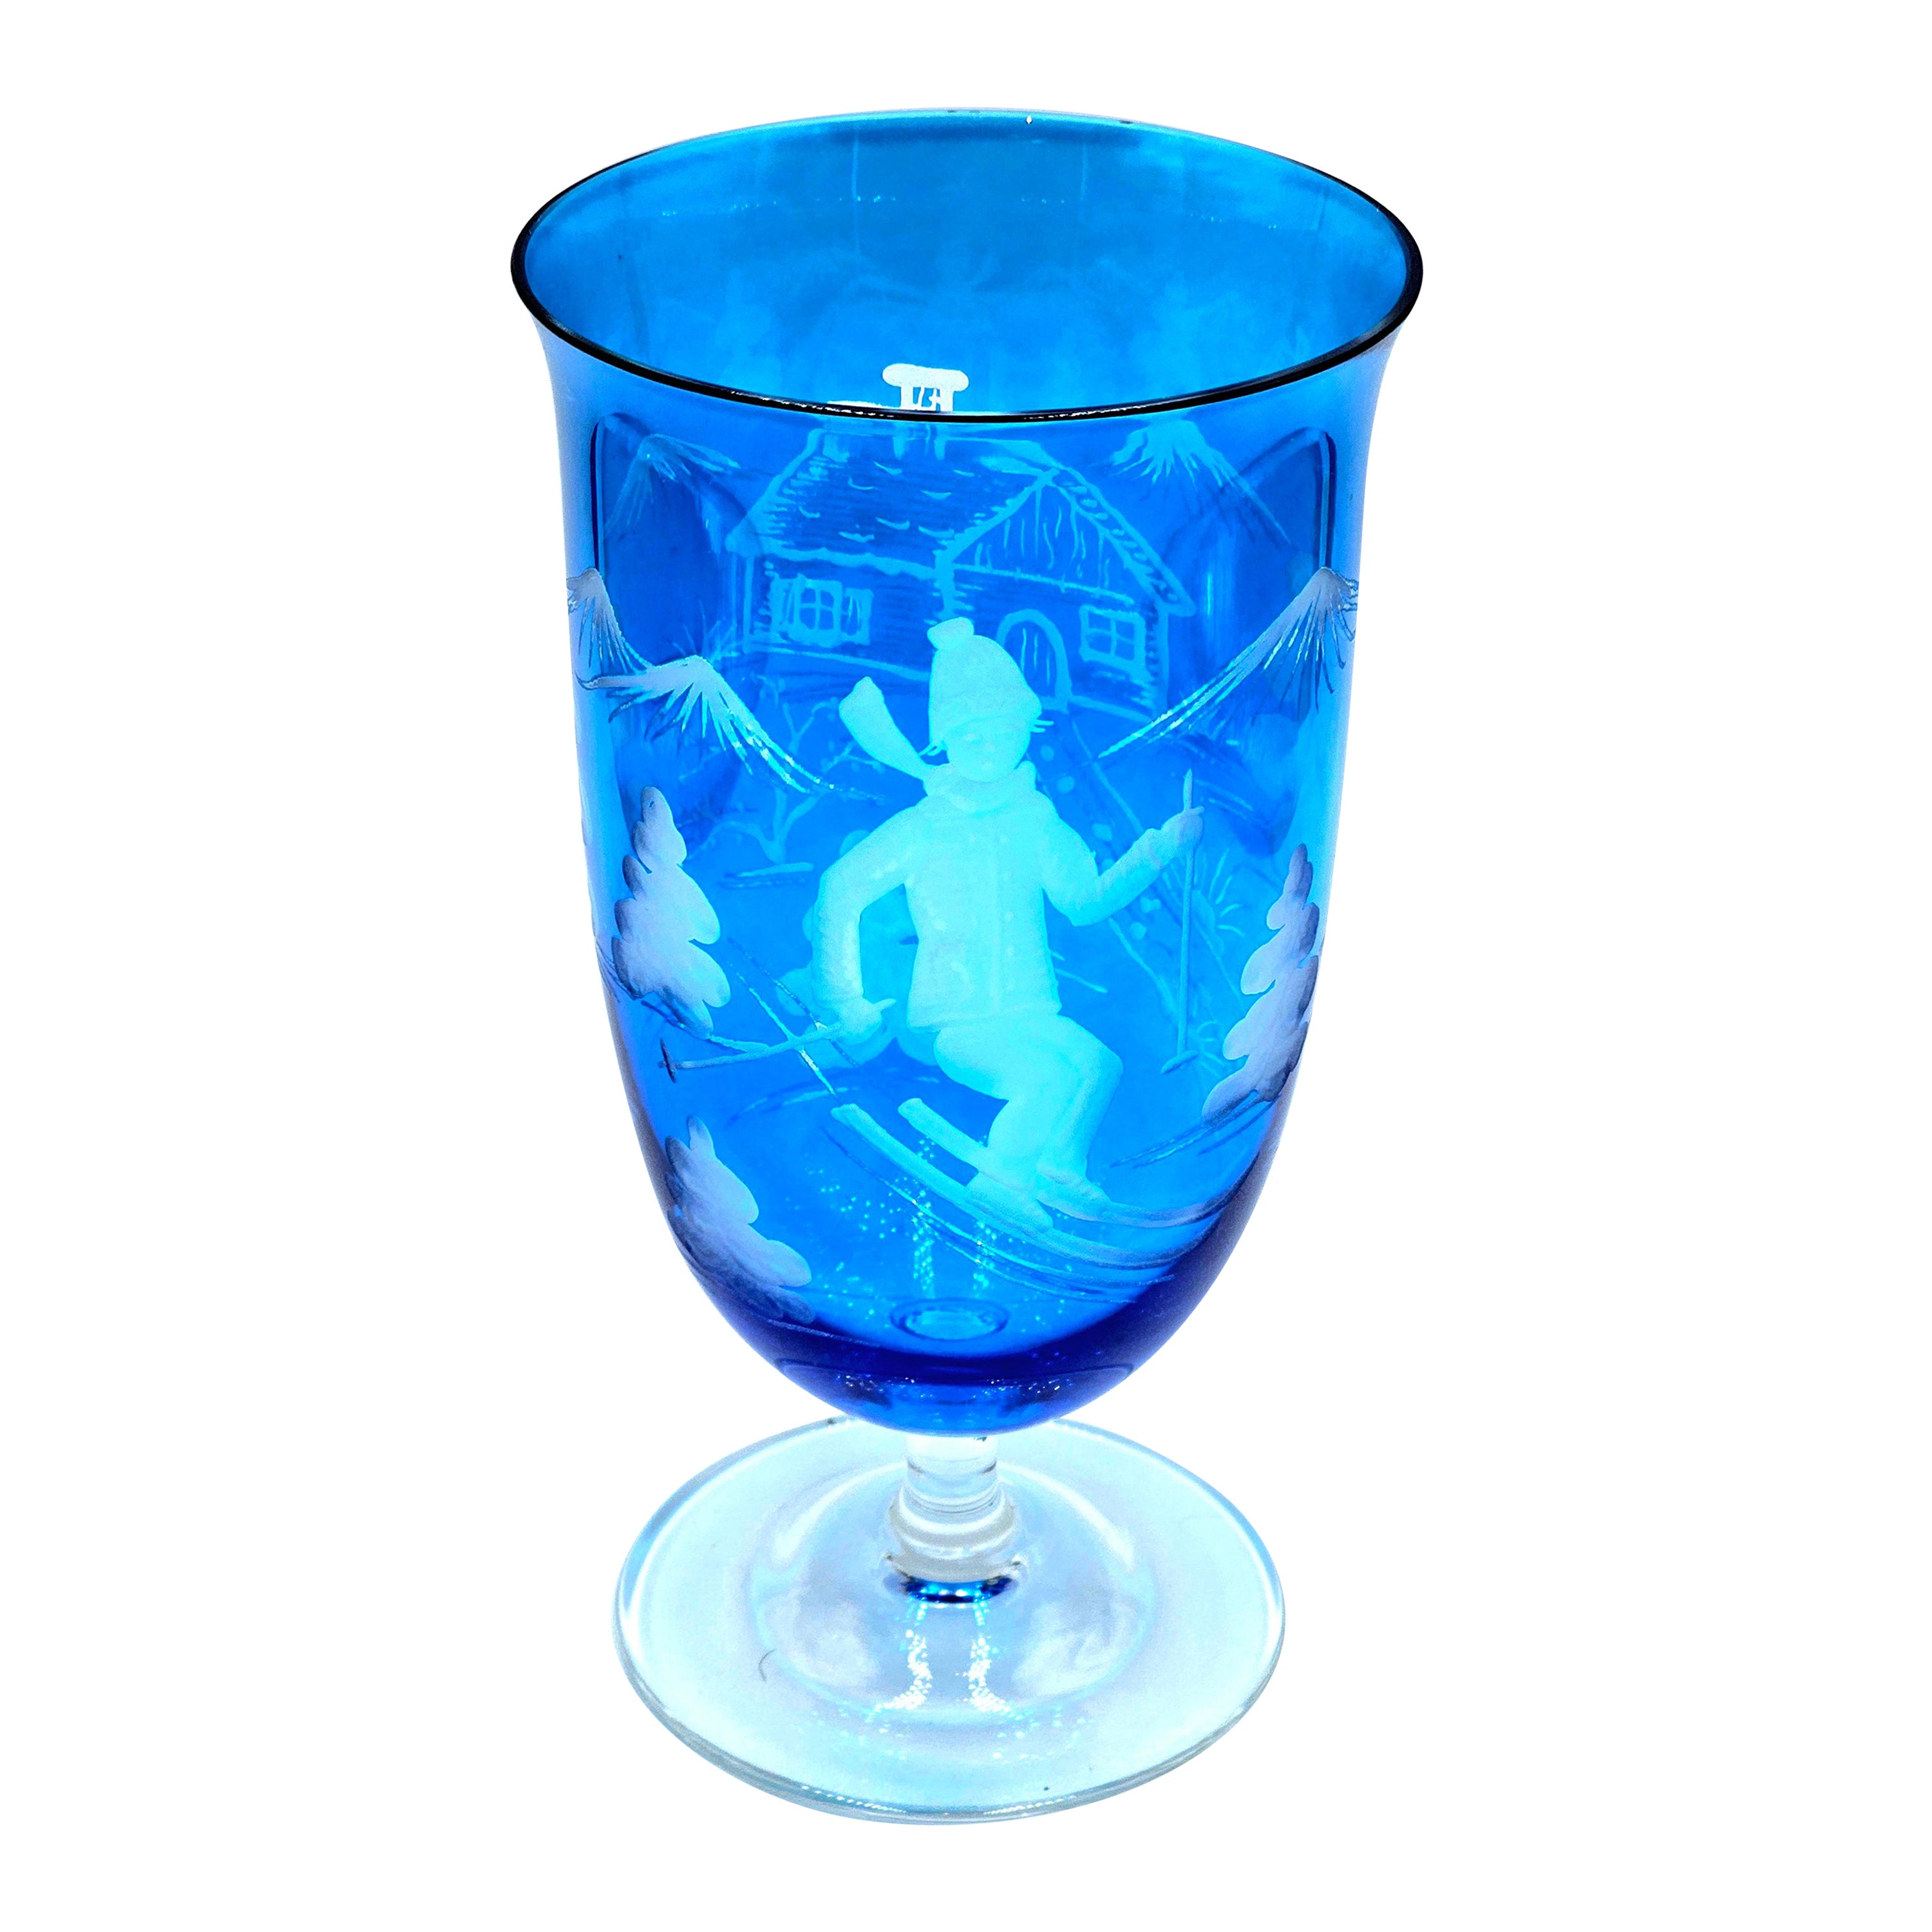 Country Style Set of Six Wine Glasses Blu Skier Decor Sofina Boutique Kitzbuehel